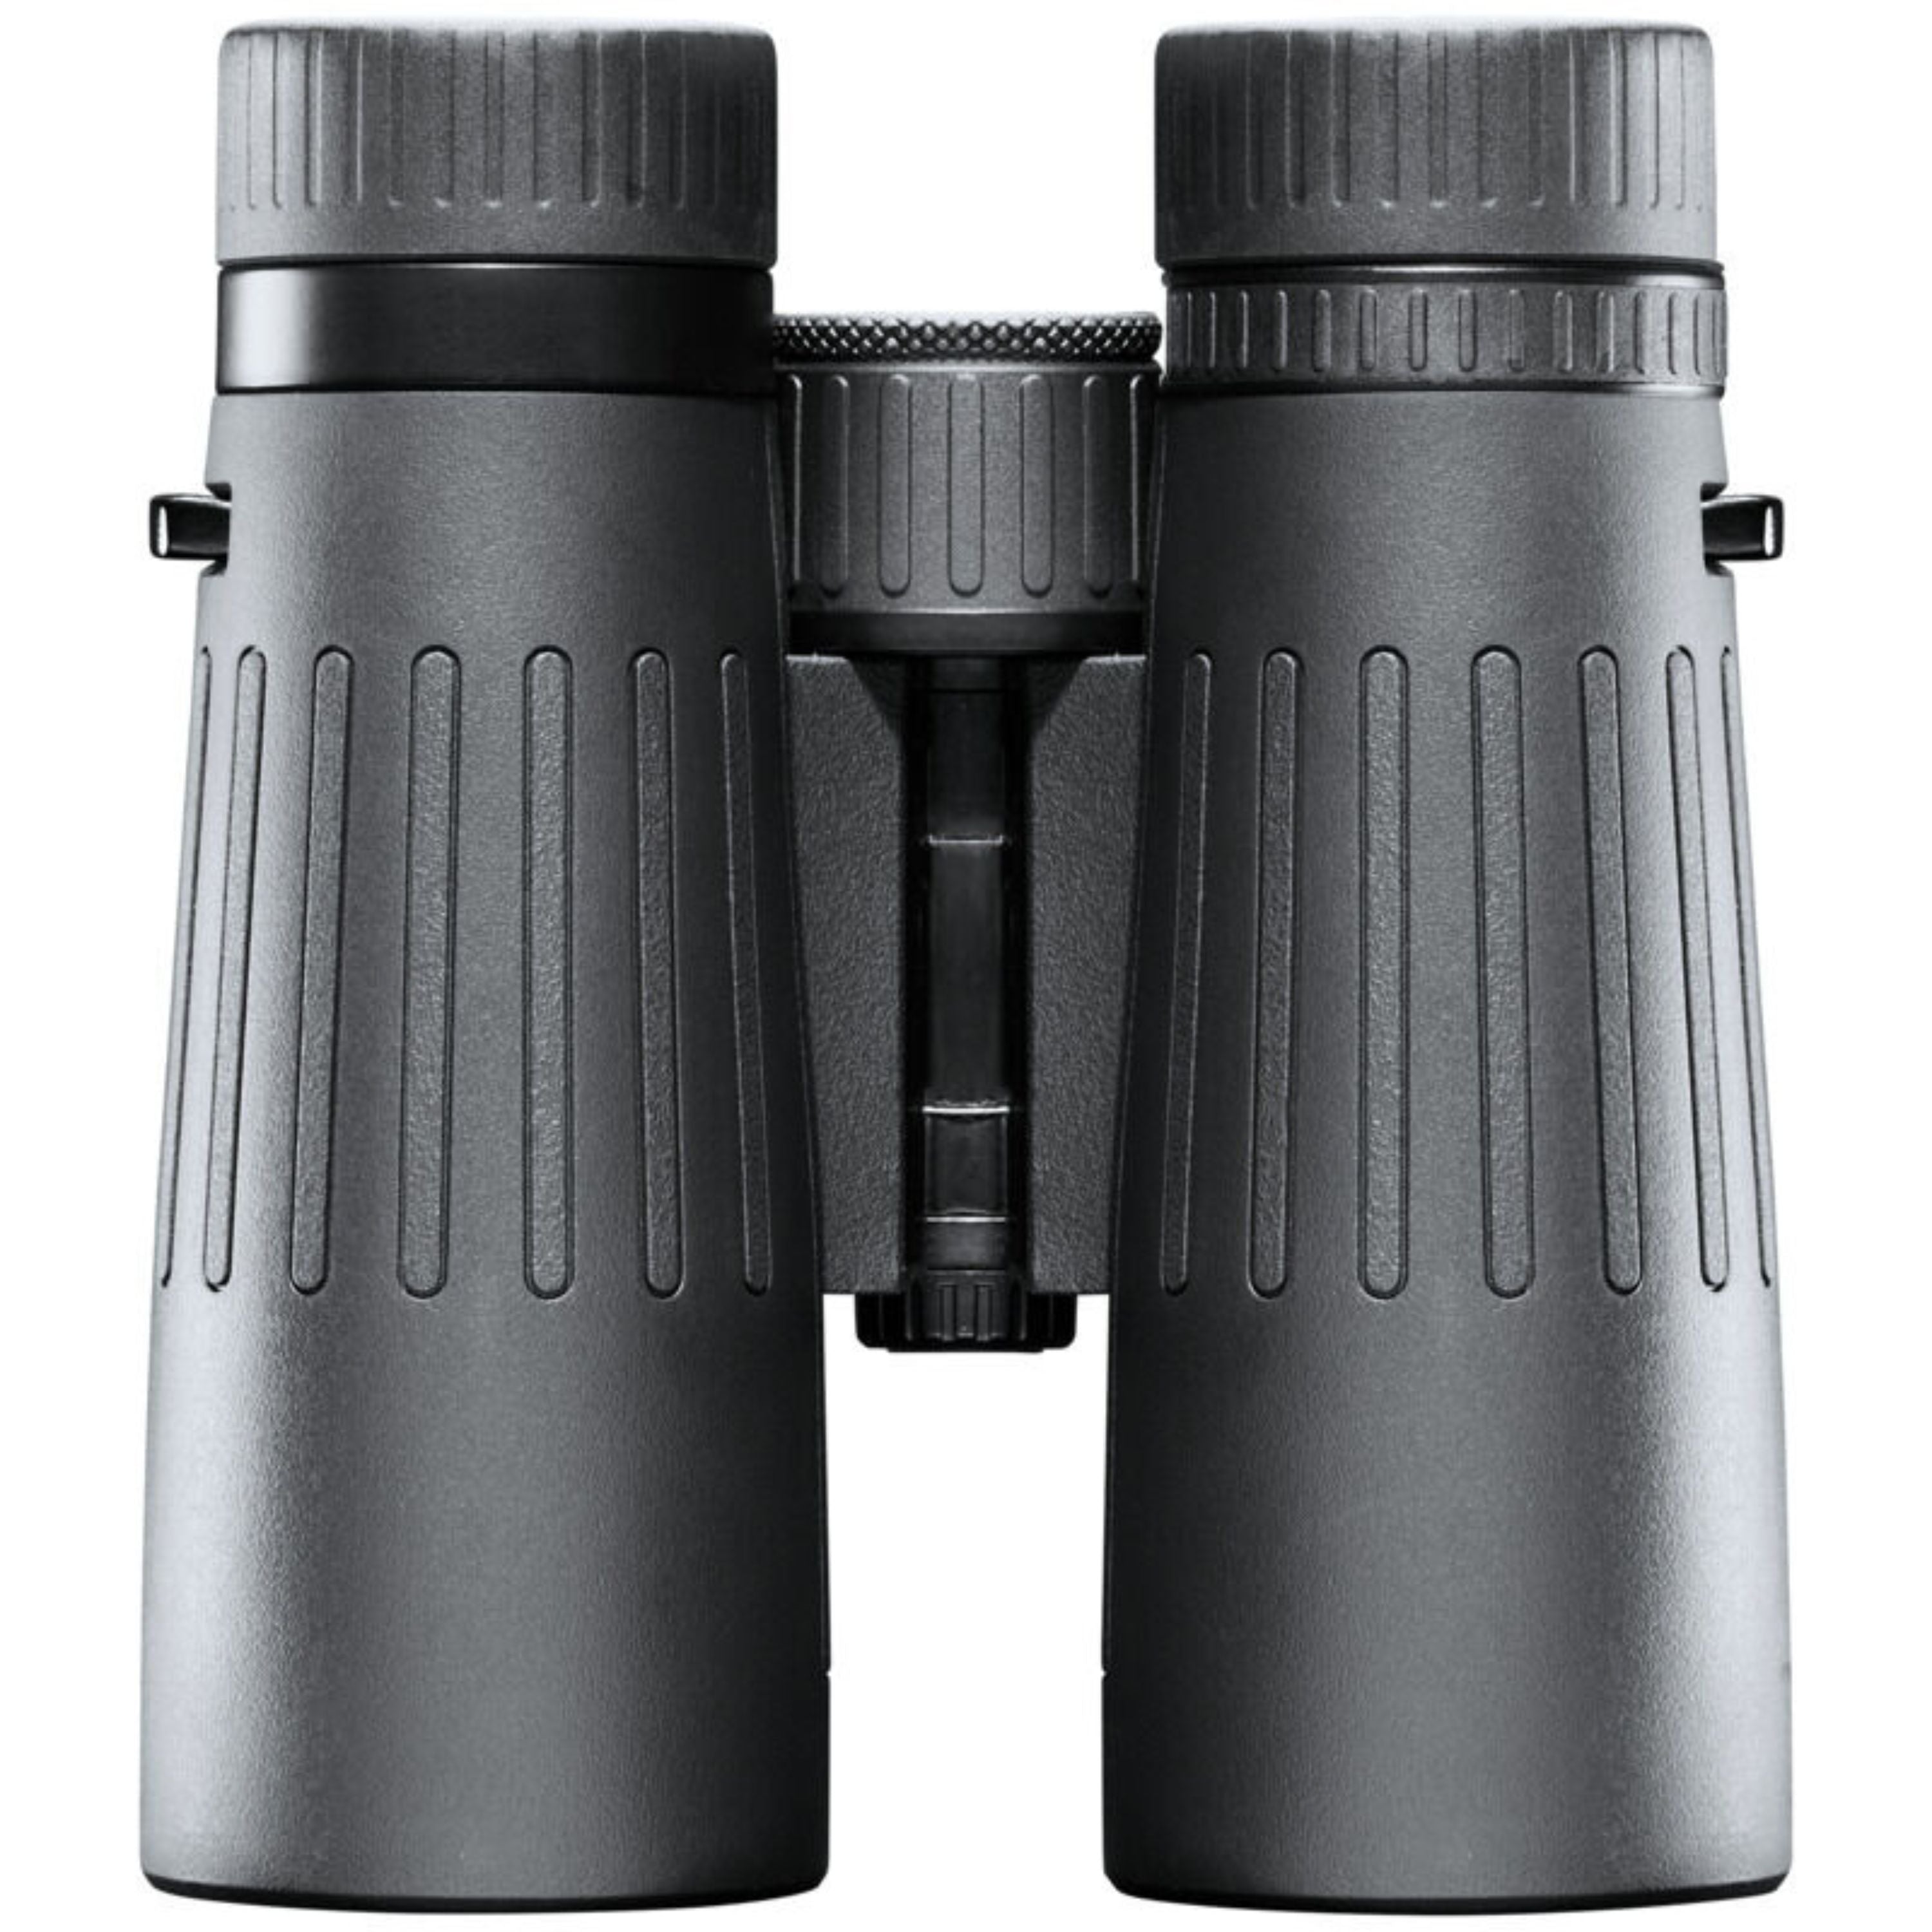 "Powerview" 8x42 mm Binocular